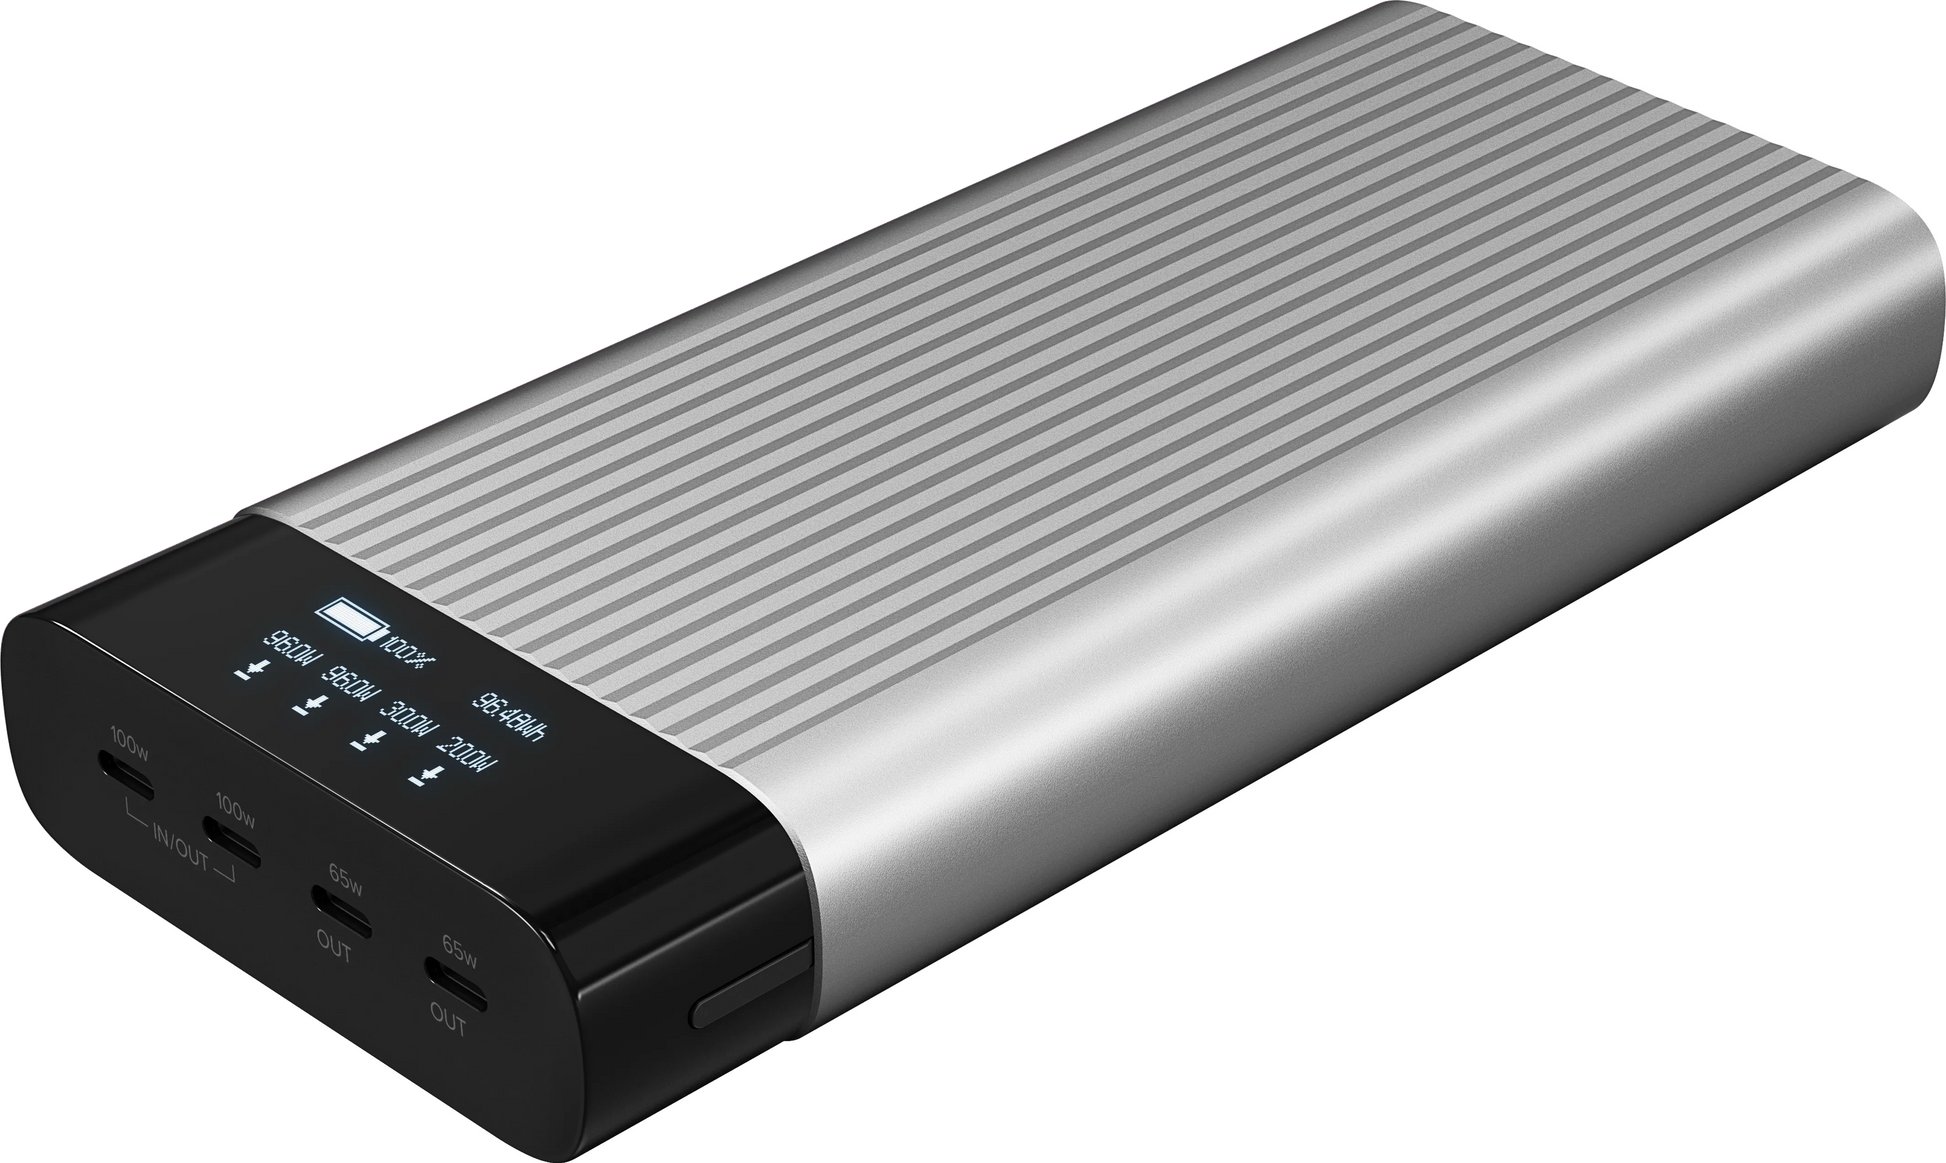 Targus HJ245B HyperJuice 245W USB-C Battery Pack with OLED display, 27000 mAh, 6941921147181